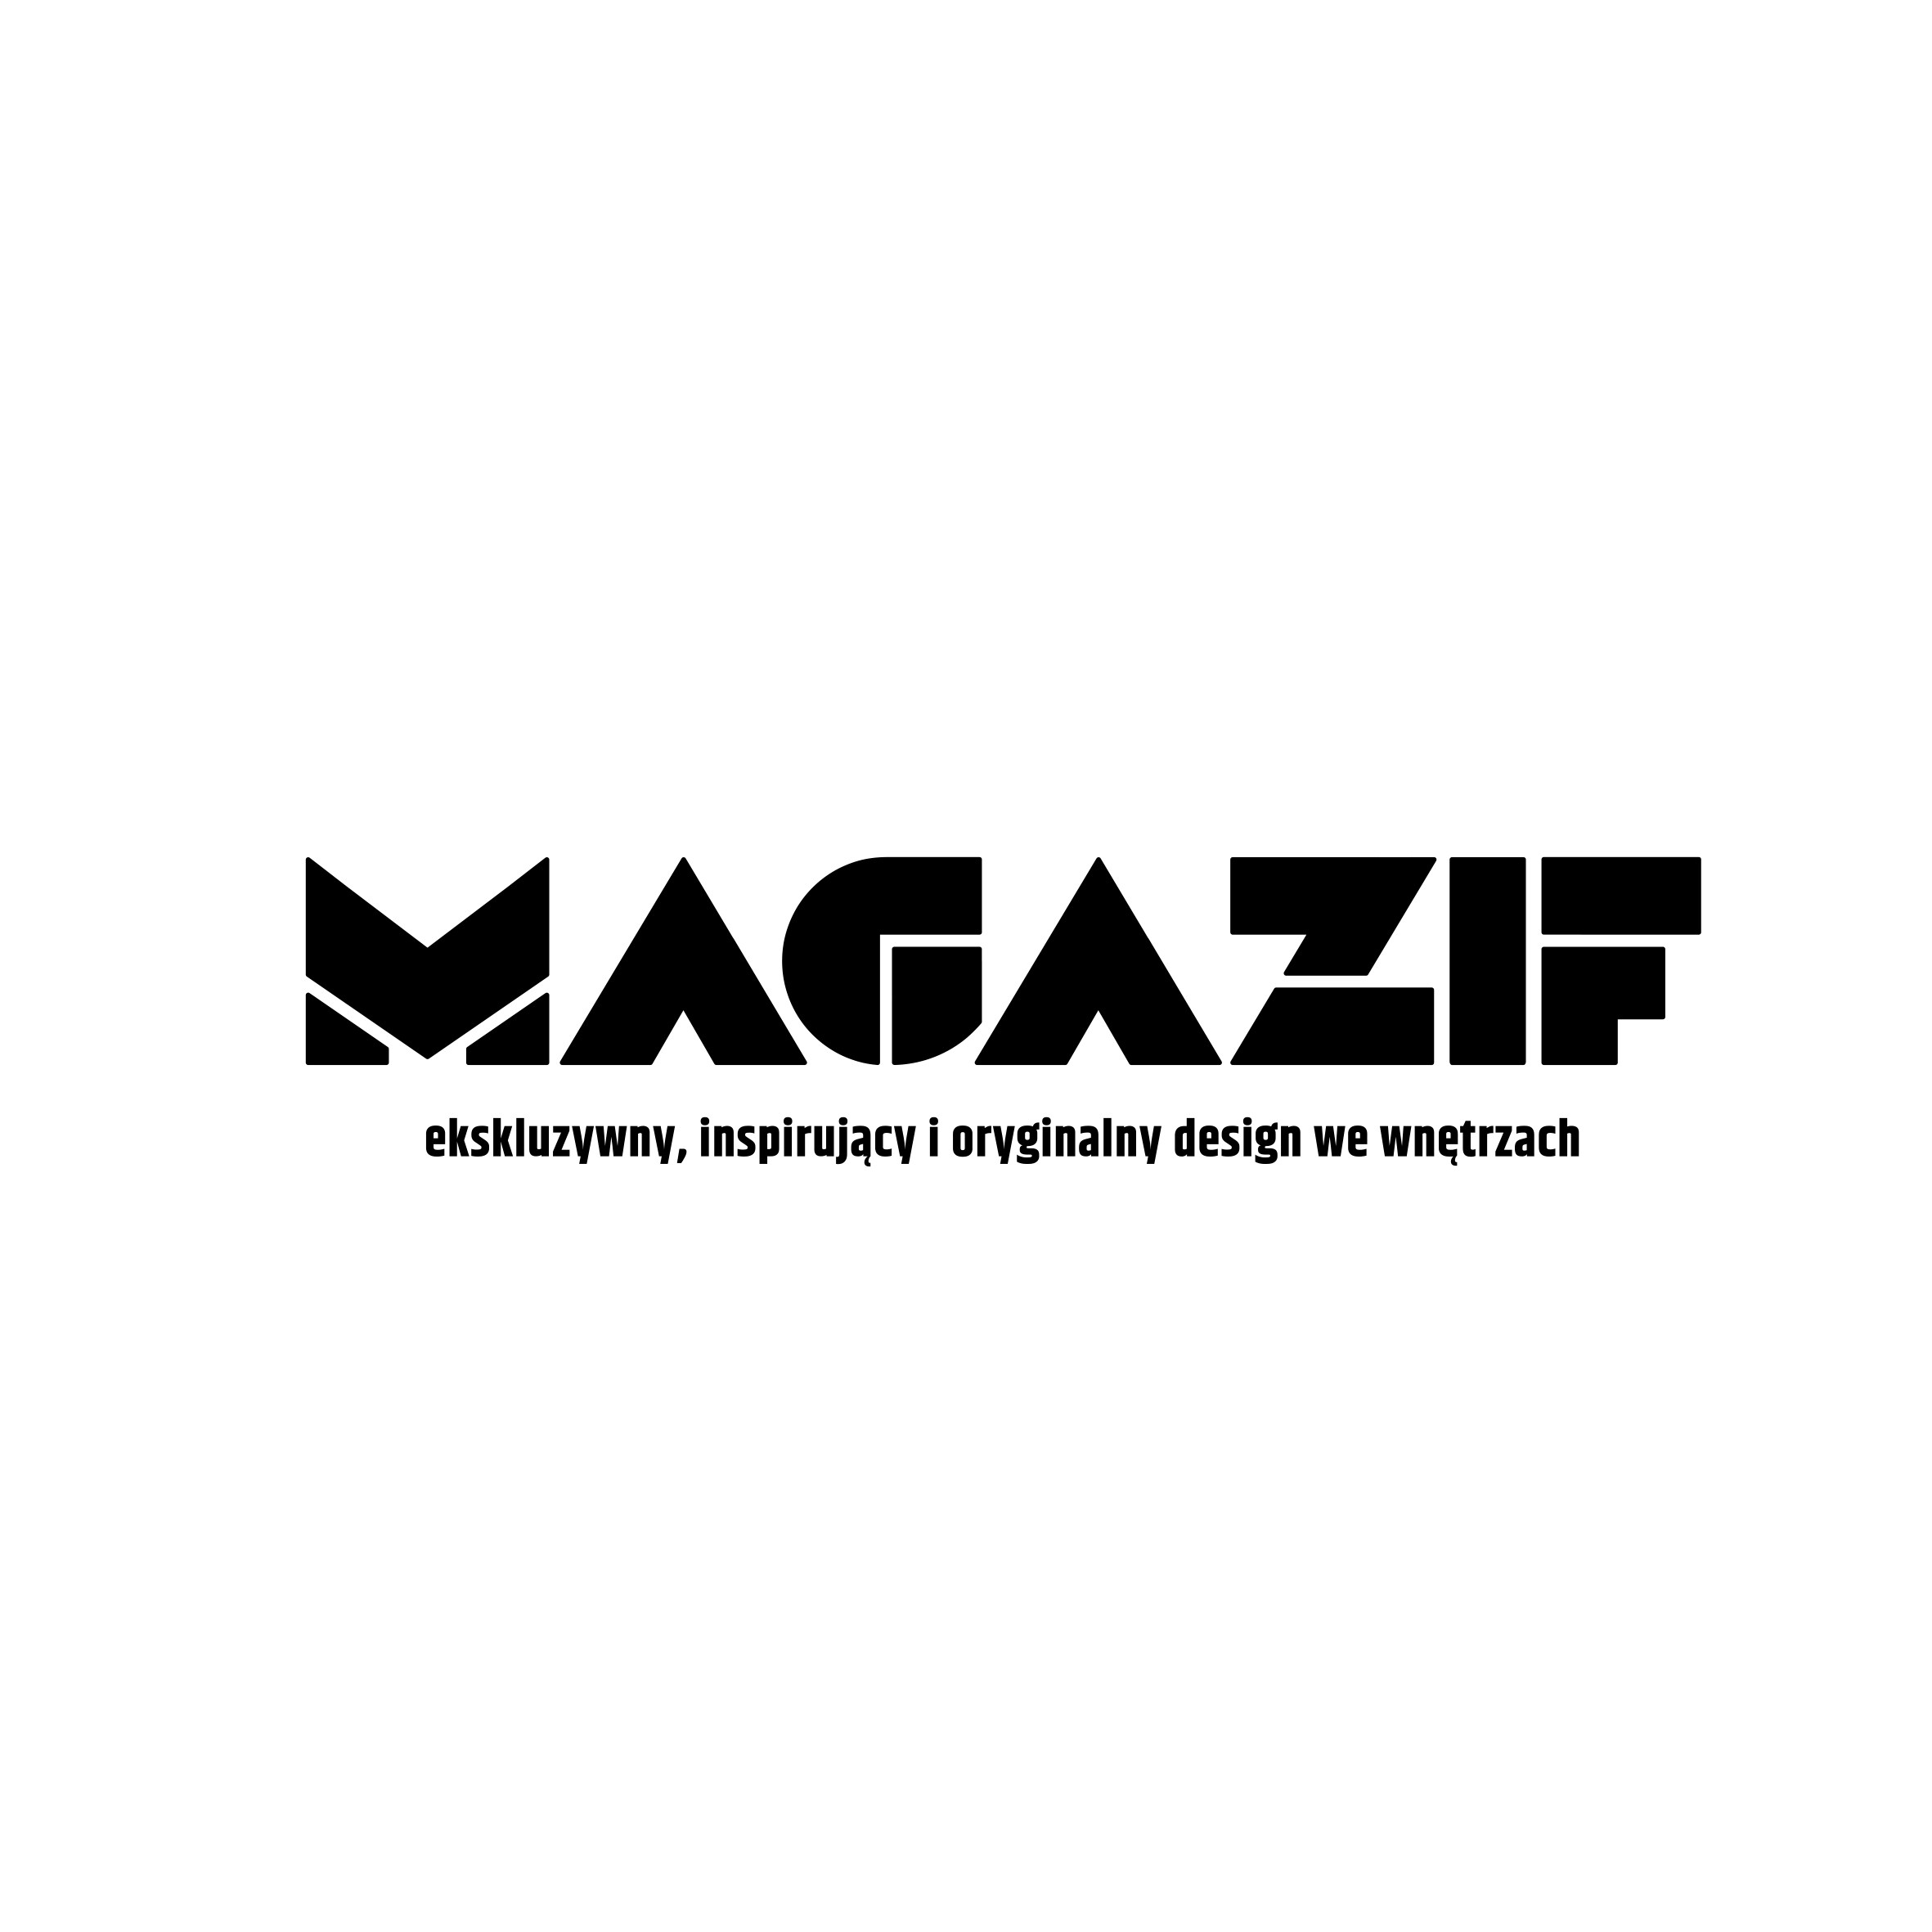 MAGAZIF-logotyp-wersja-ze-sloganem-2019.png